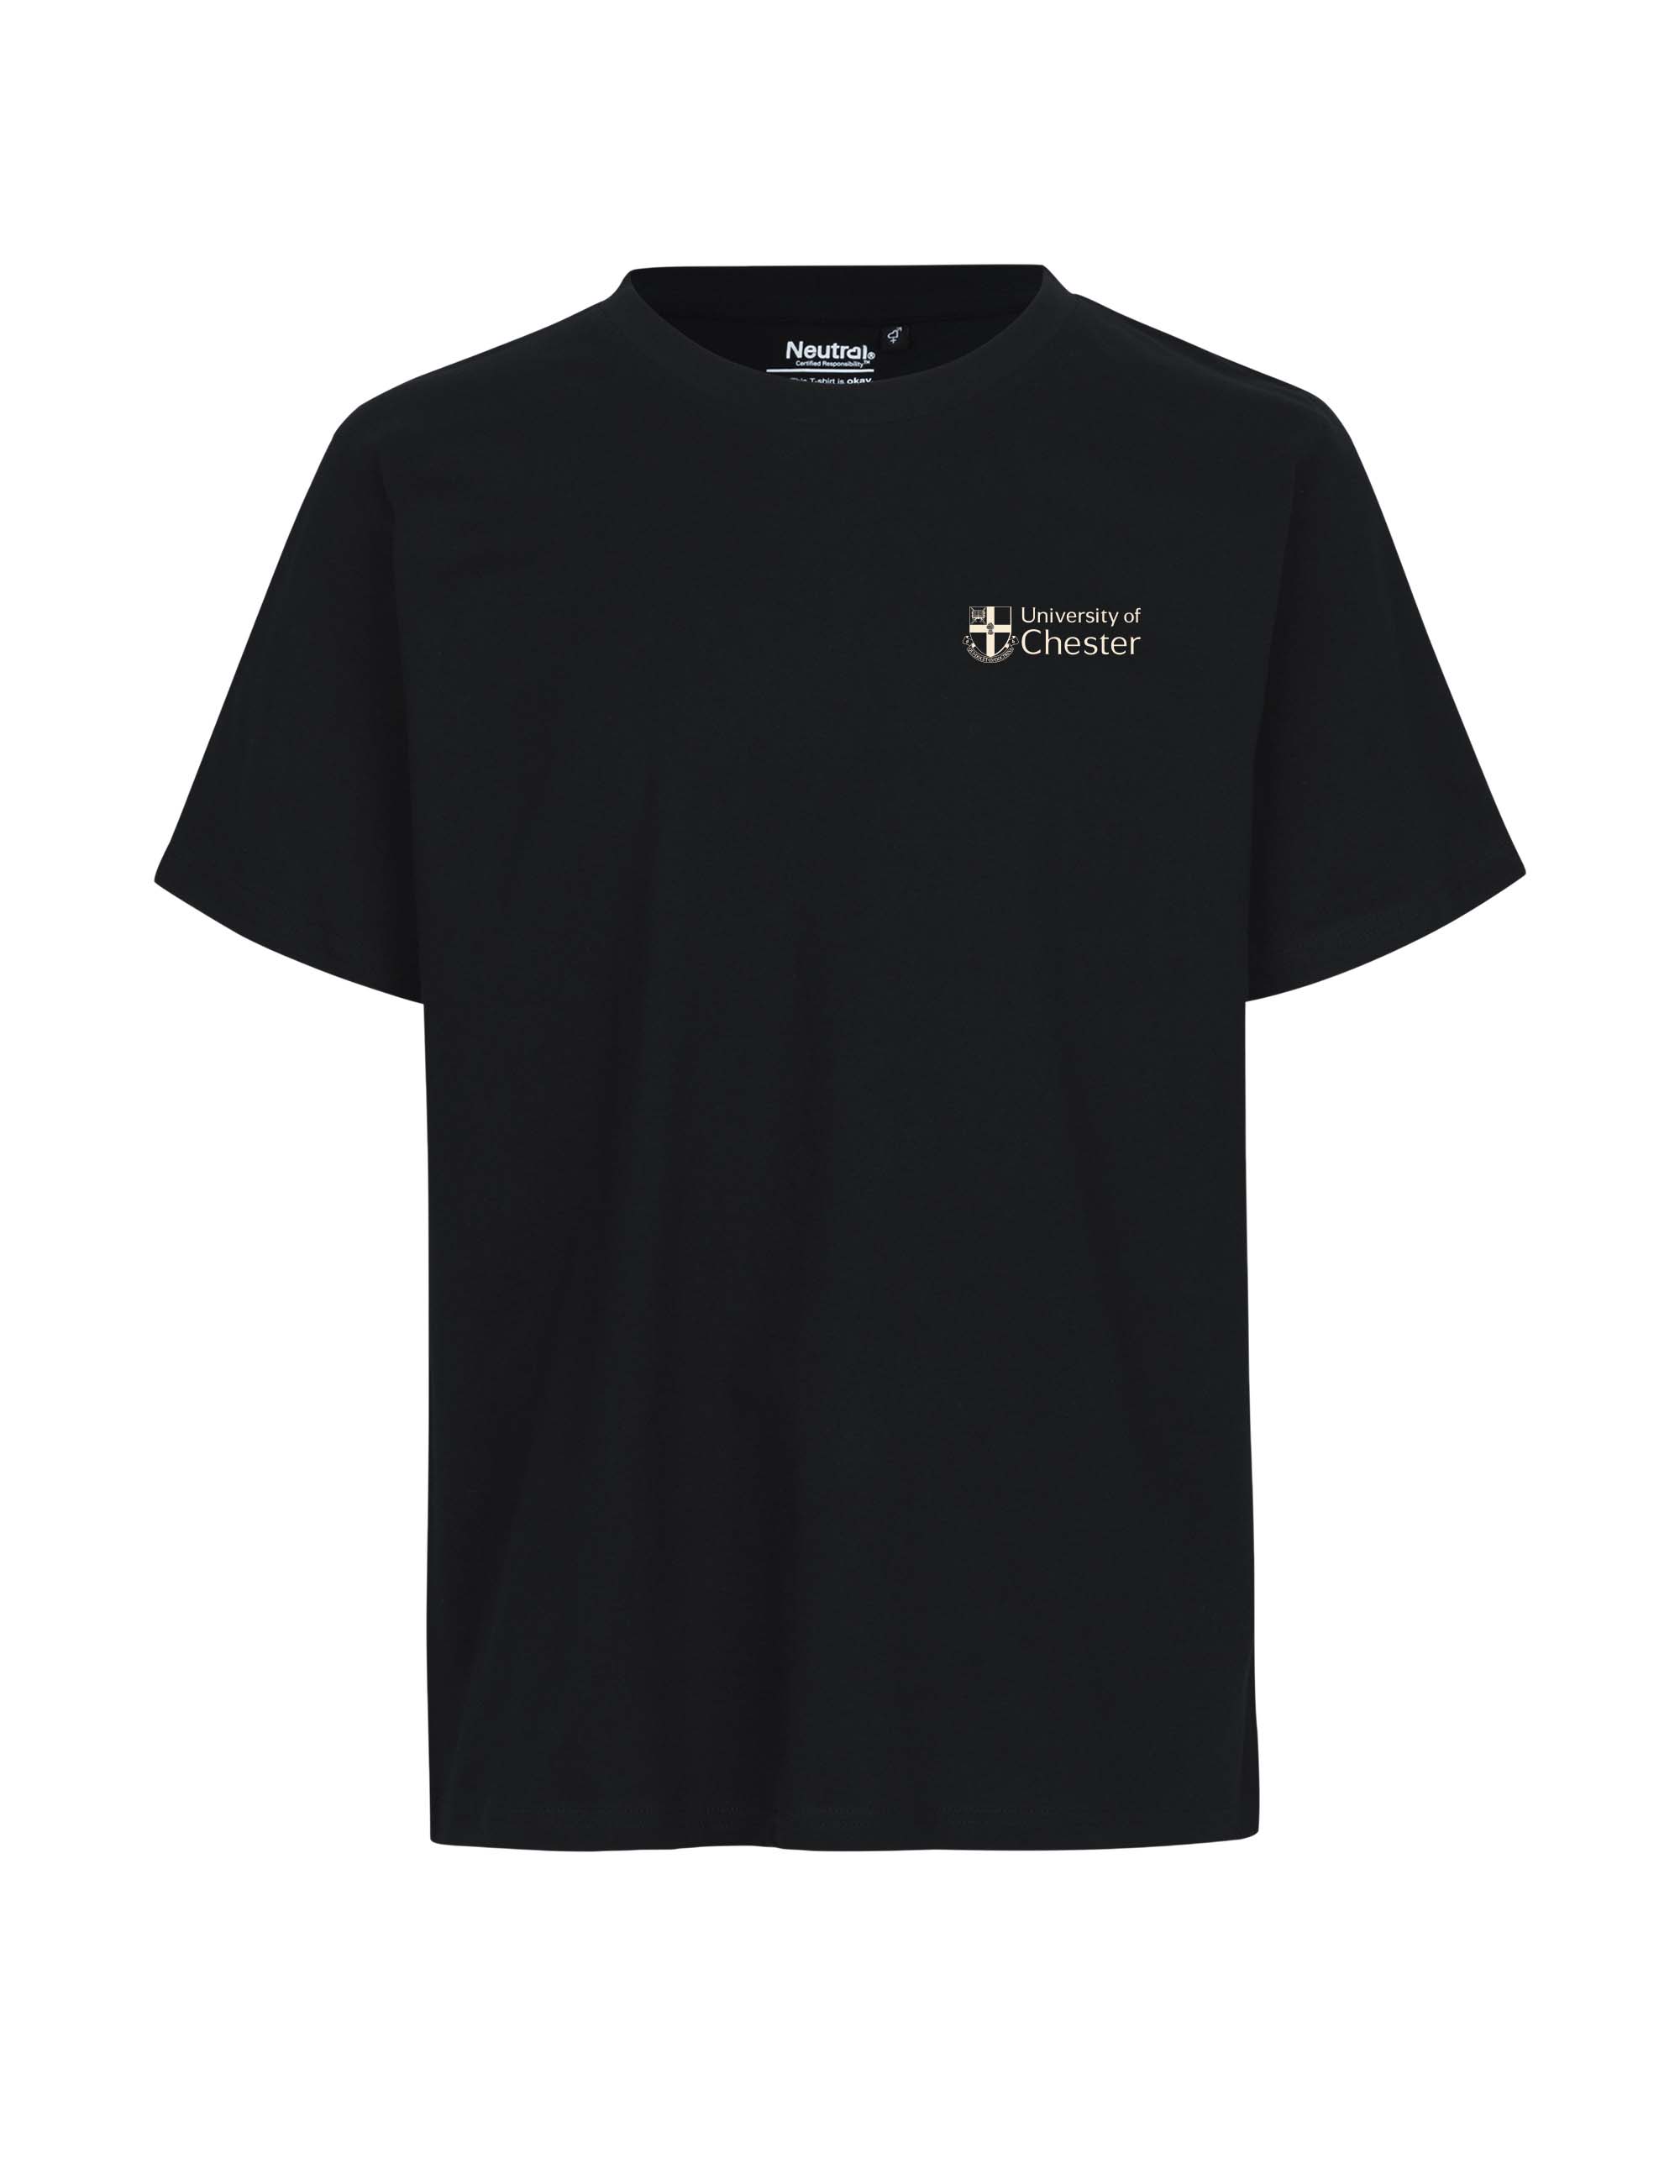 Neutral range - UoC T-Shirt - Black - L